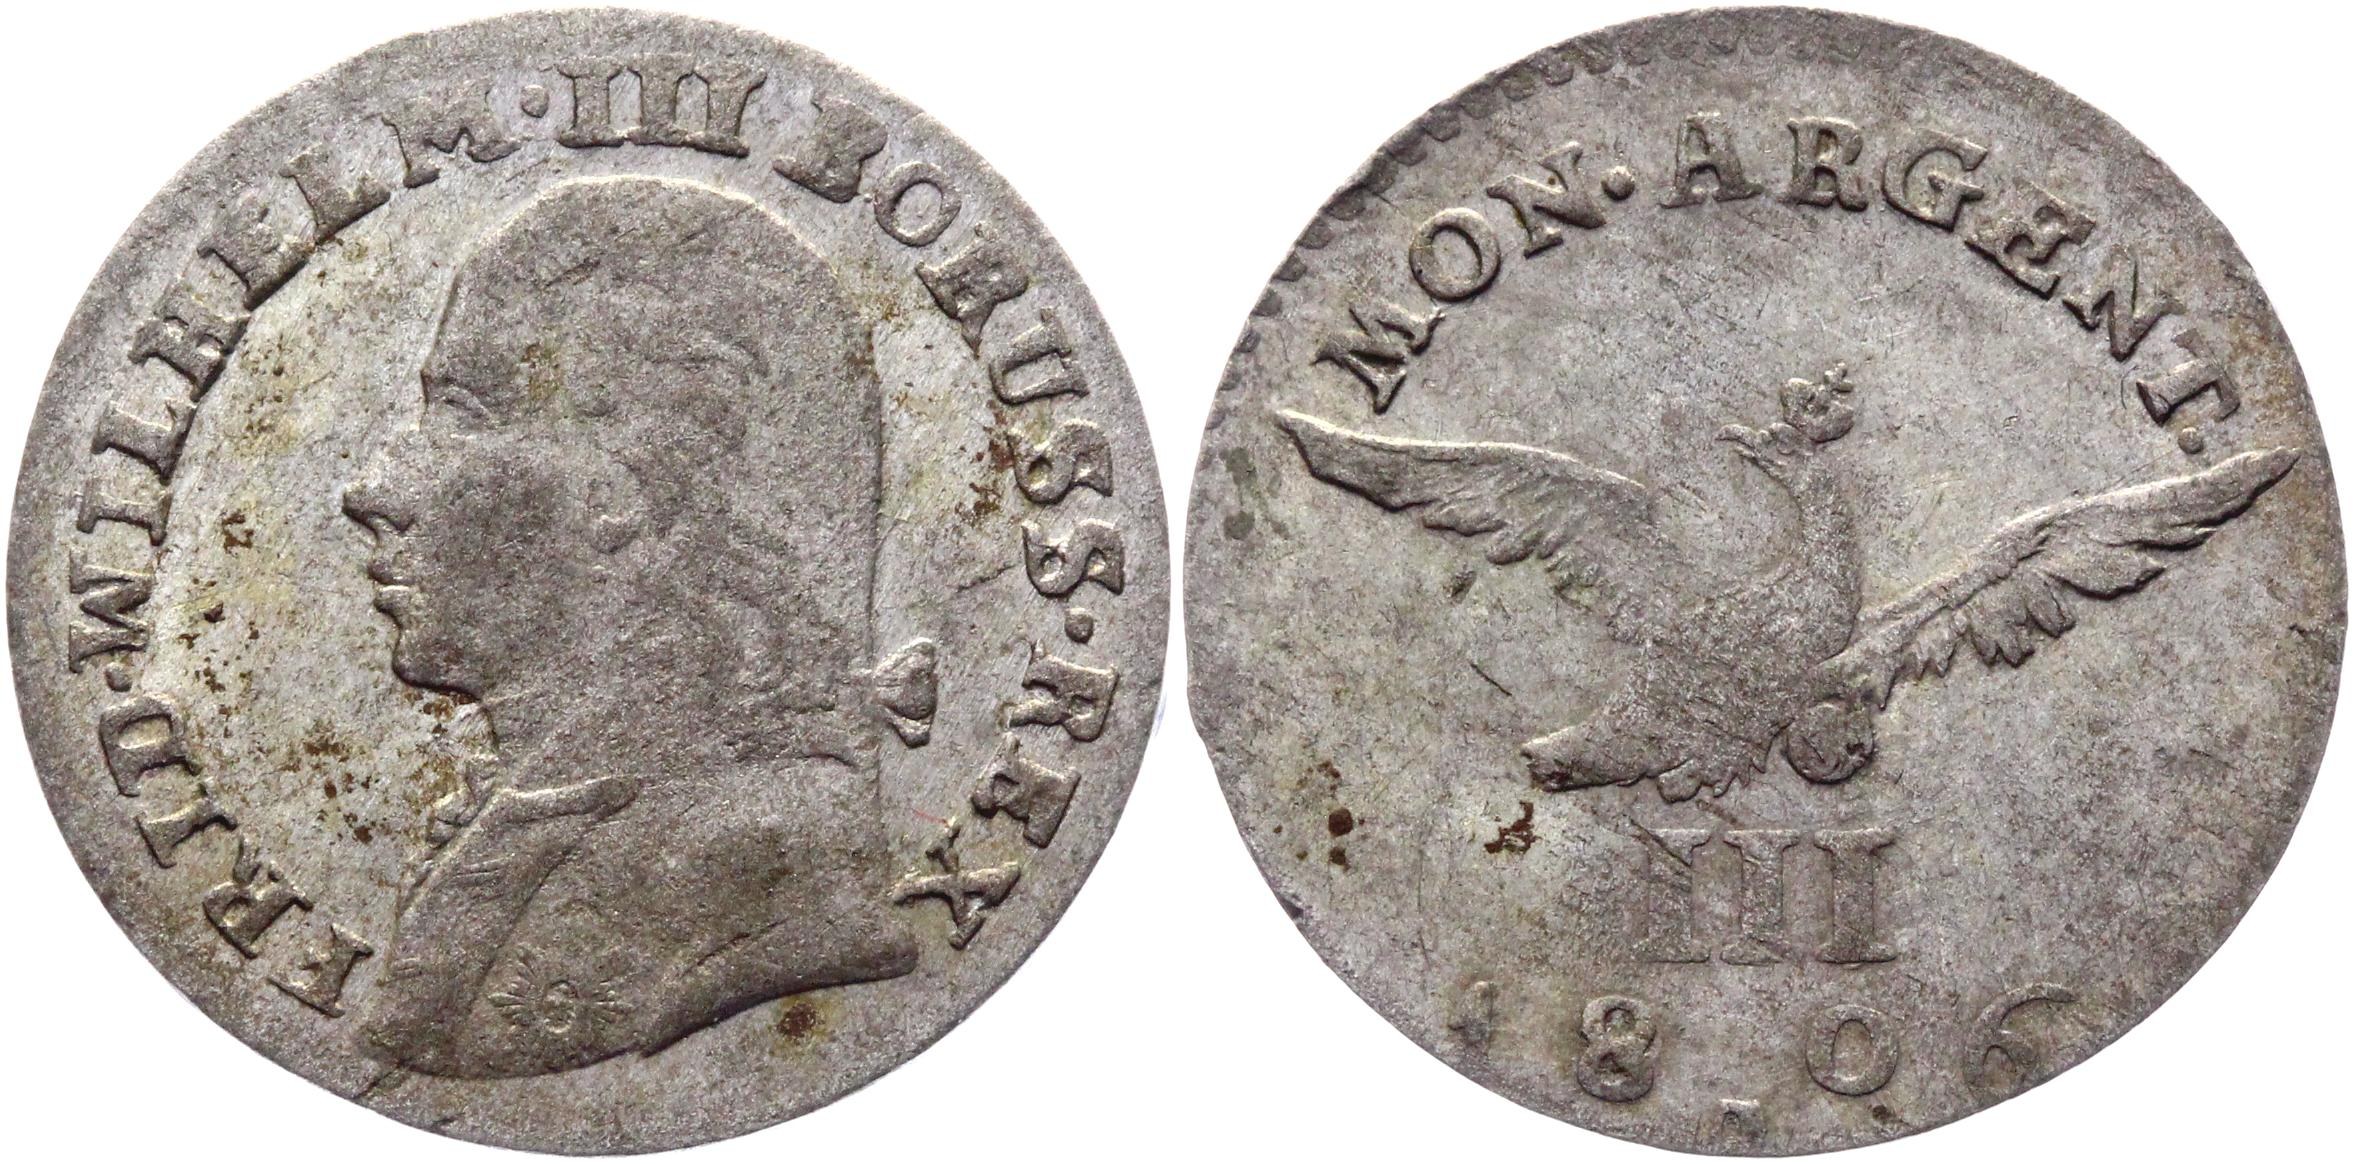 03 1800. Монета Friedr. Wilhelm 3. Bruxelles 1807 монета.